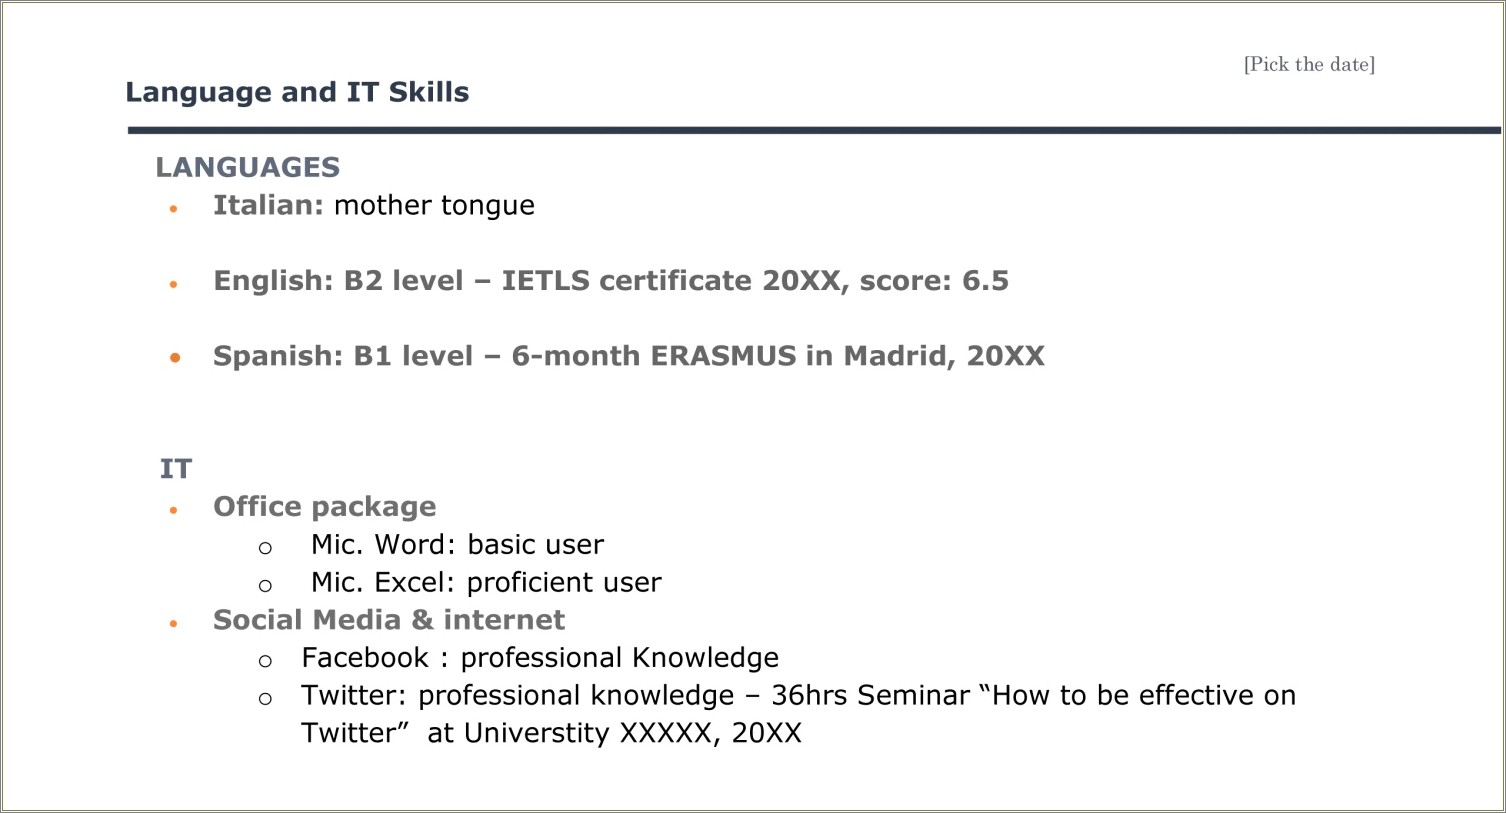 Computing Skills To Mention On Resume